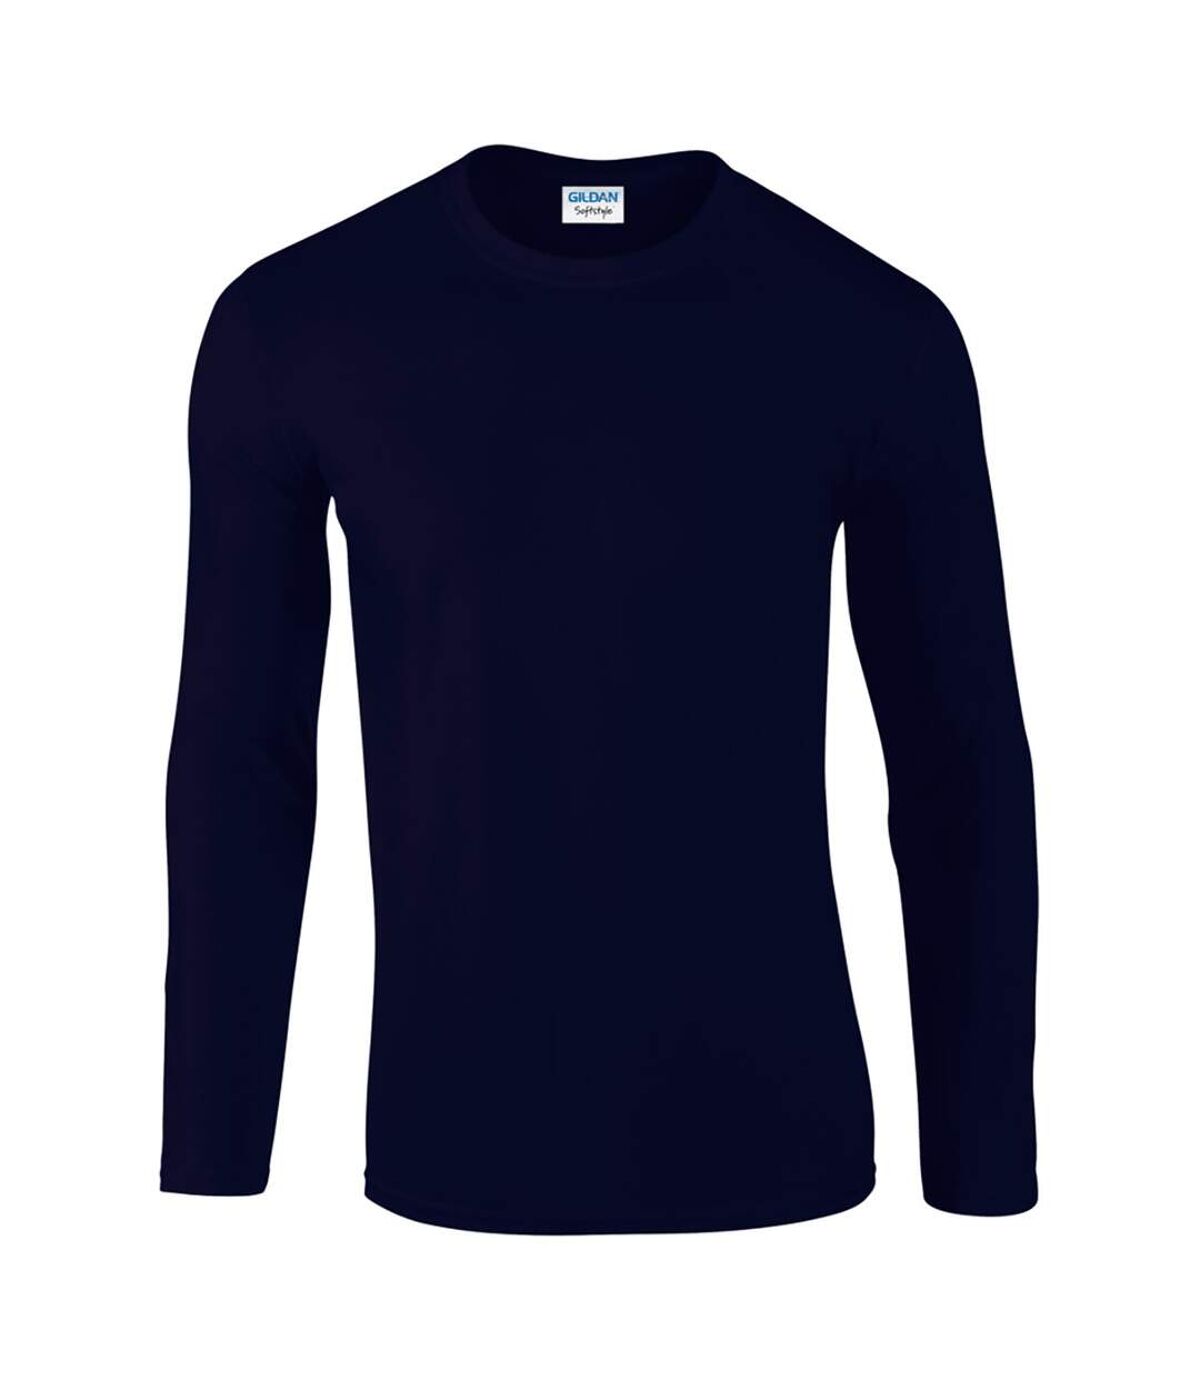 Gildan Mens Soft Style Long Sleeve T-Shirt (Navy)